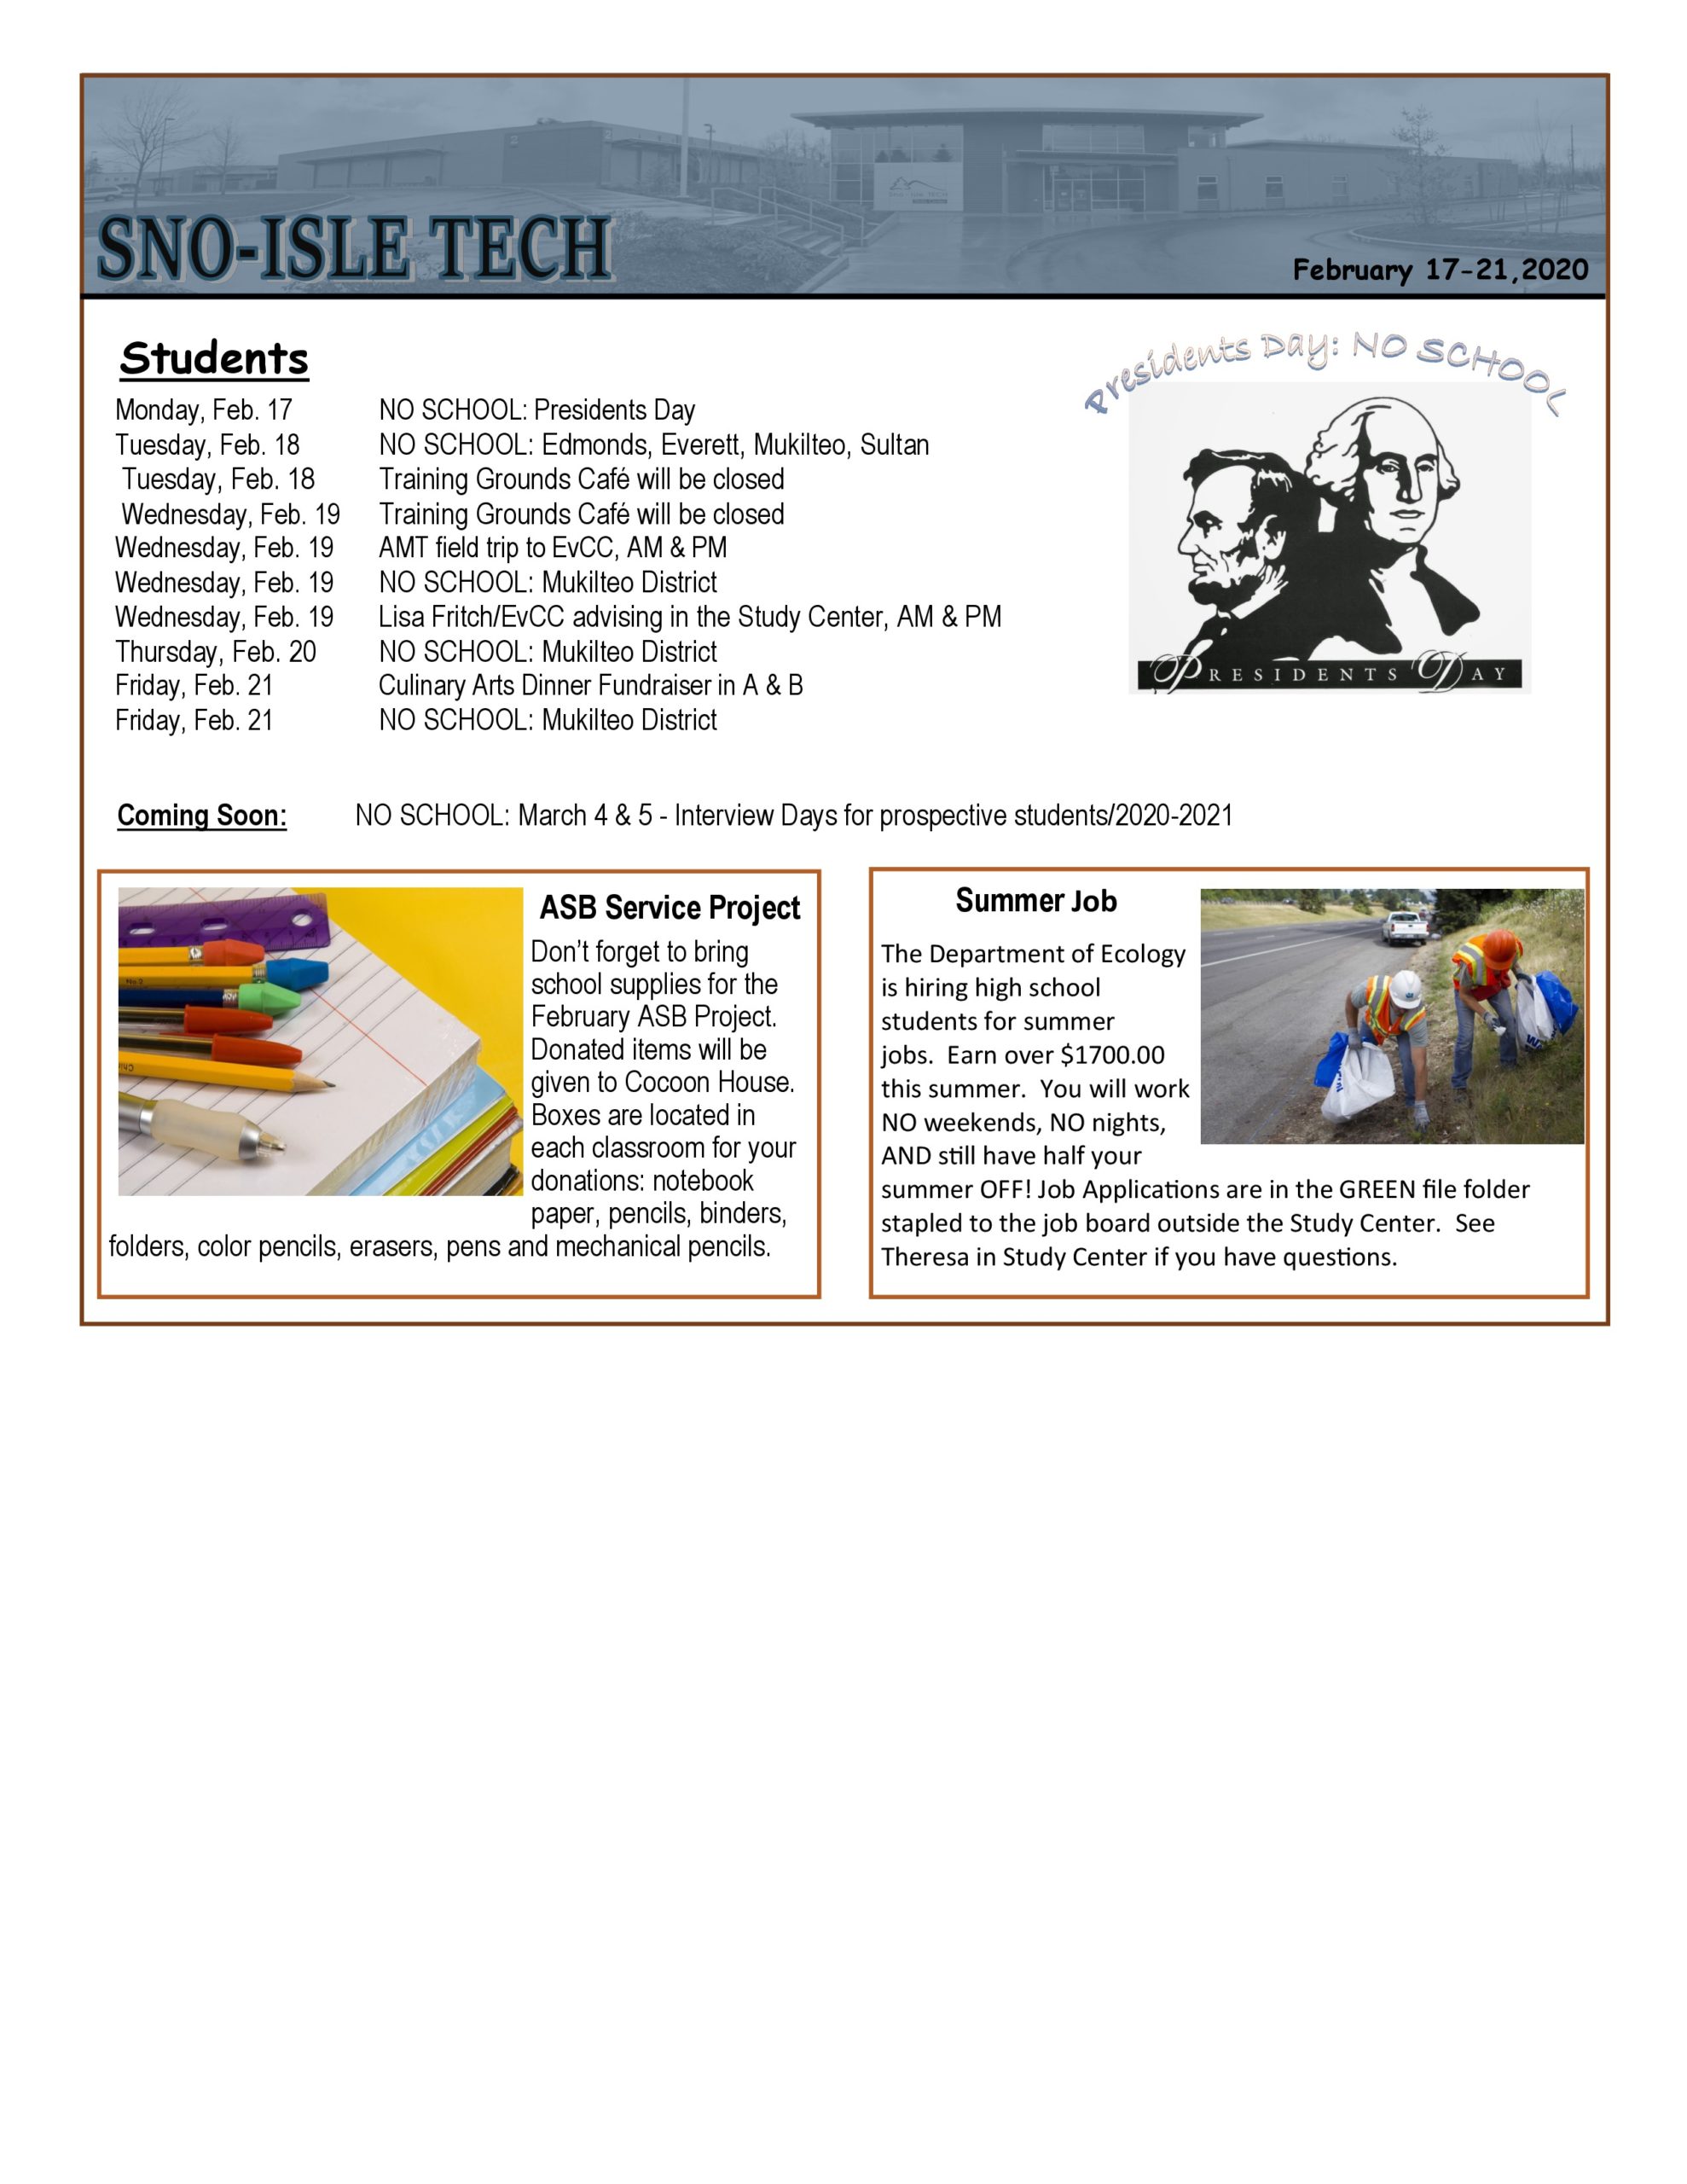 Sno-Isle TECH Student Bulletin Feb. 17-21